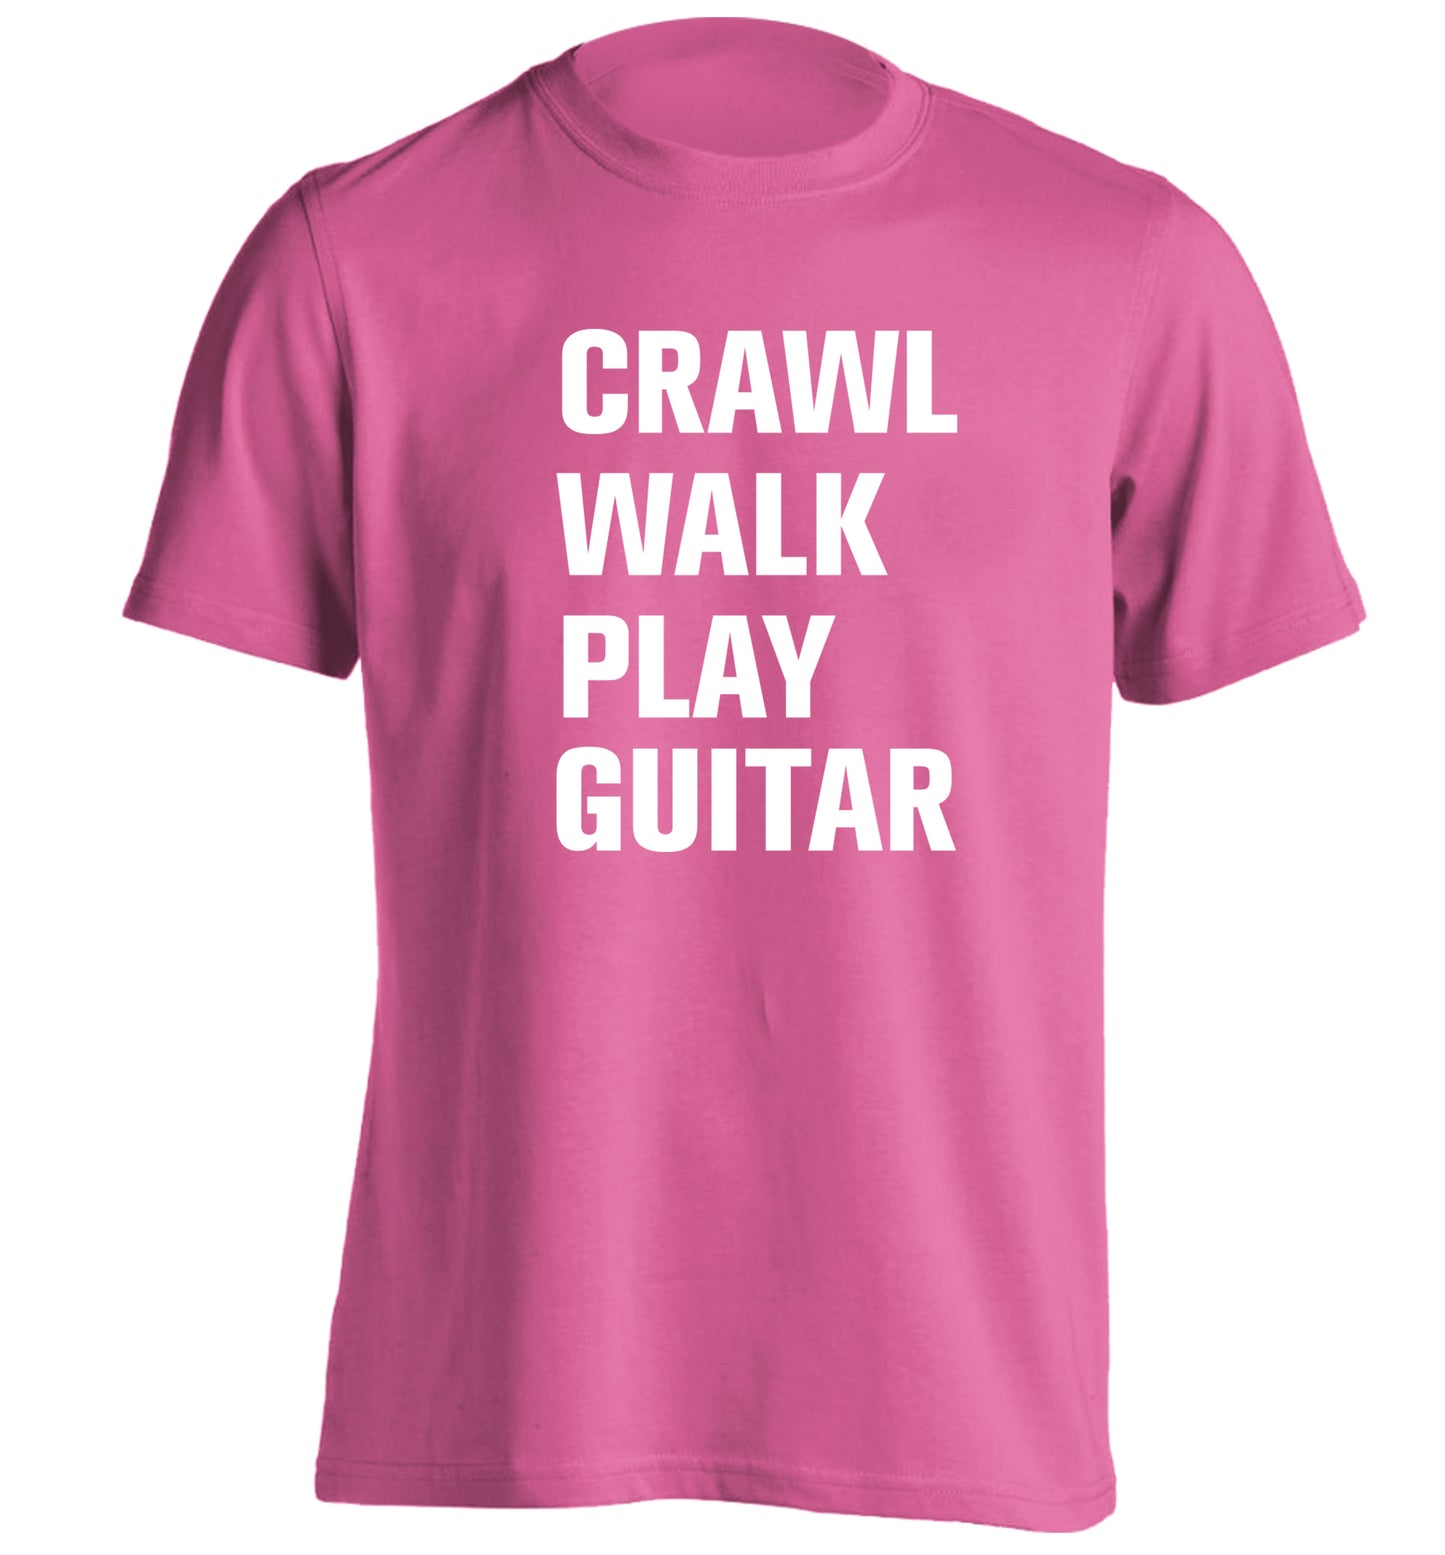 Crawl walk play guitar adults unisex pink Tshirt 2XL